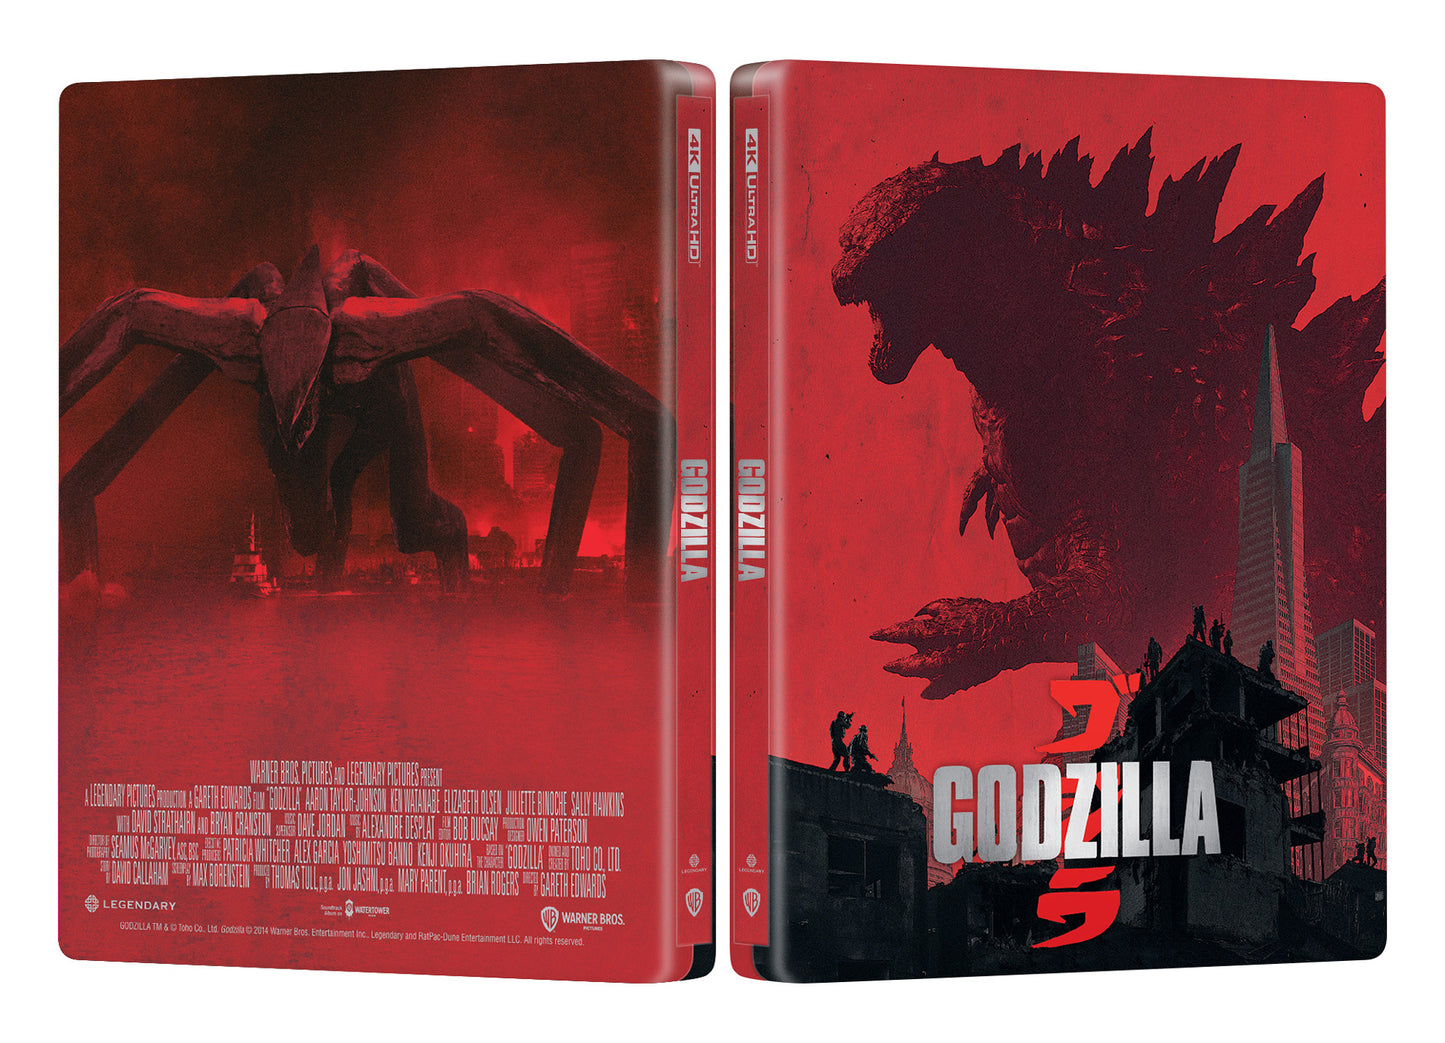 Godzilla 4K Blu-ray Steelbook Manta Lab Exclusive ME#42 One Click Box Set - PREORDER